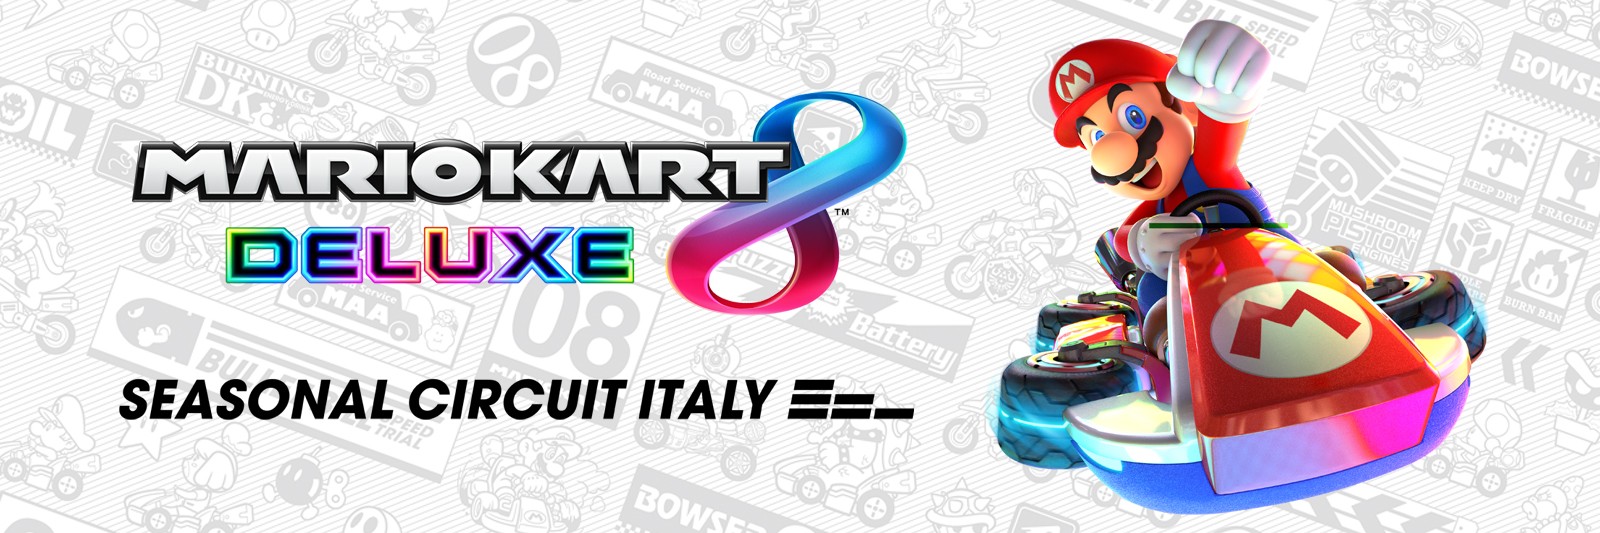 Seasonal Circuit Italy Mario Kart